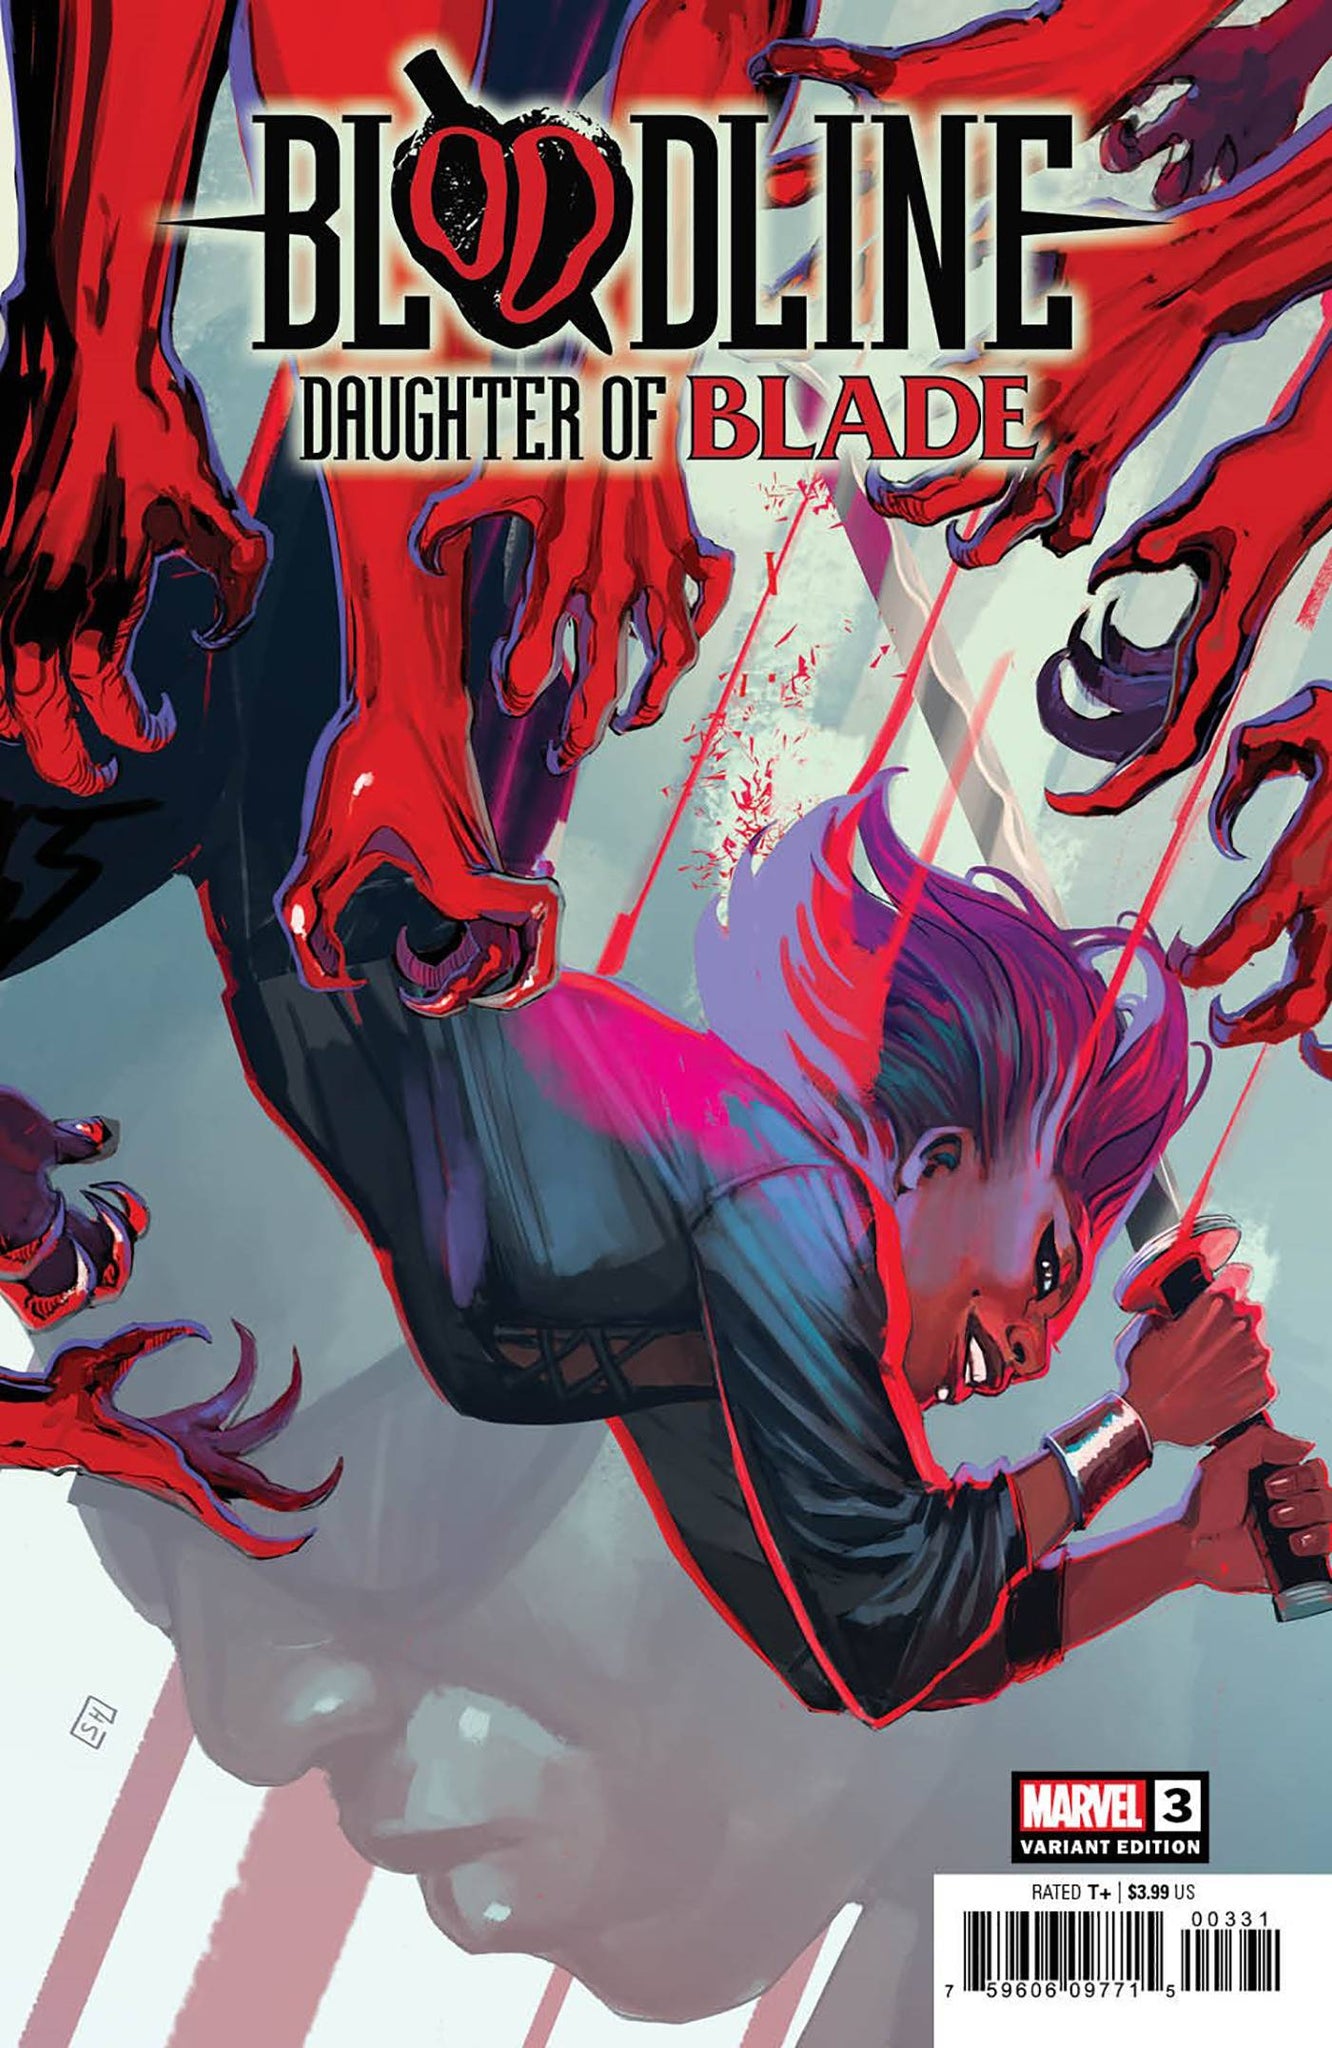 BLOODLINE DAUGHTER OF BLADE #3